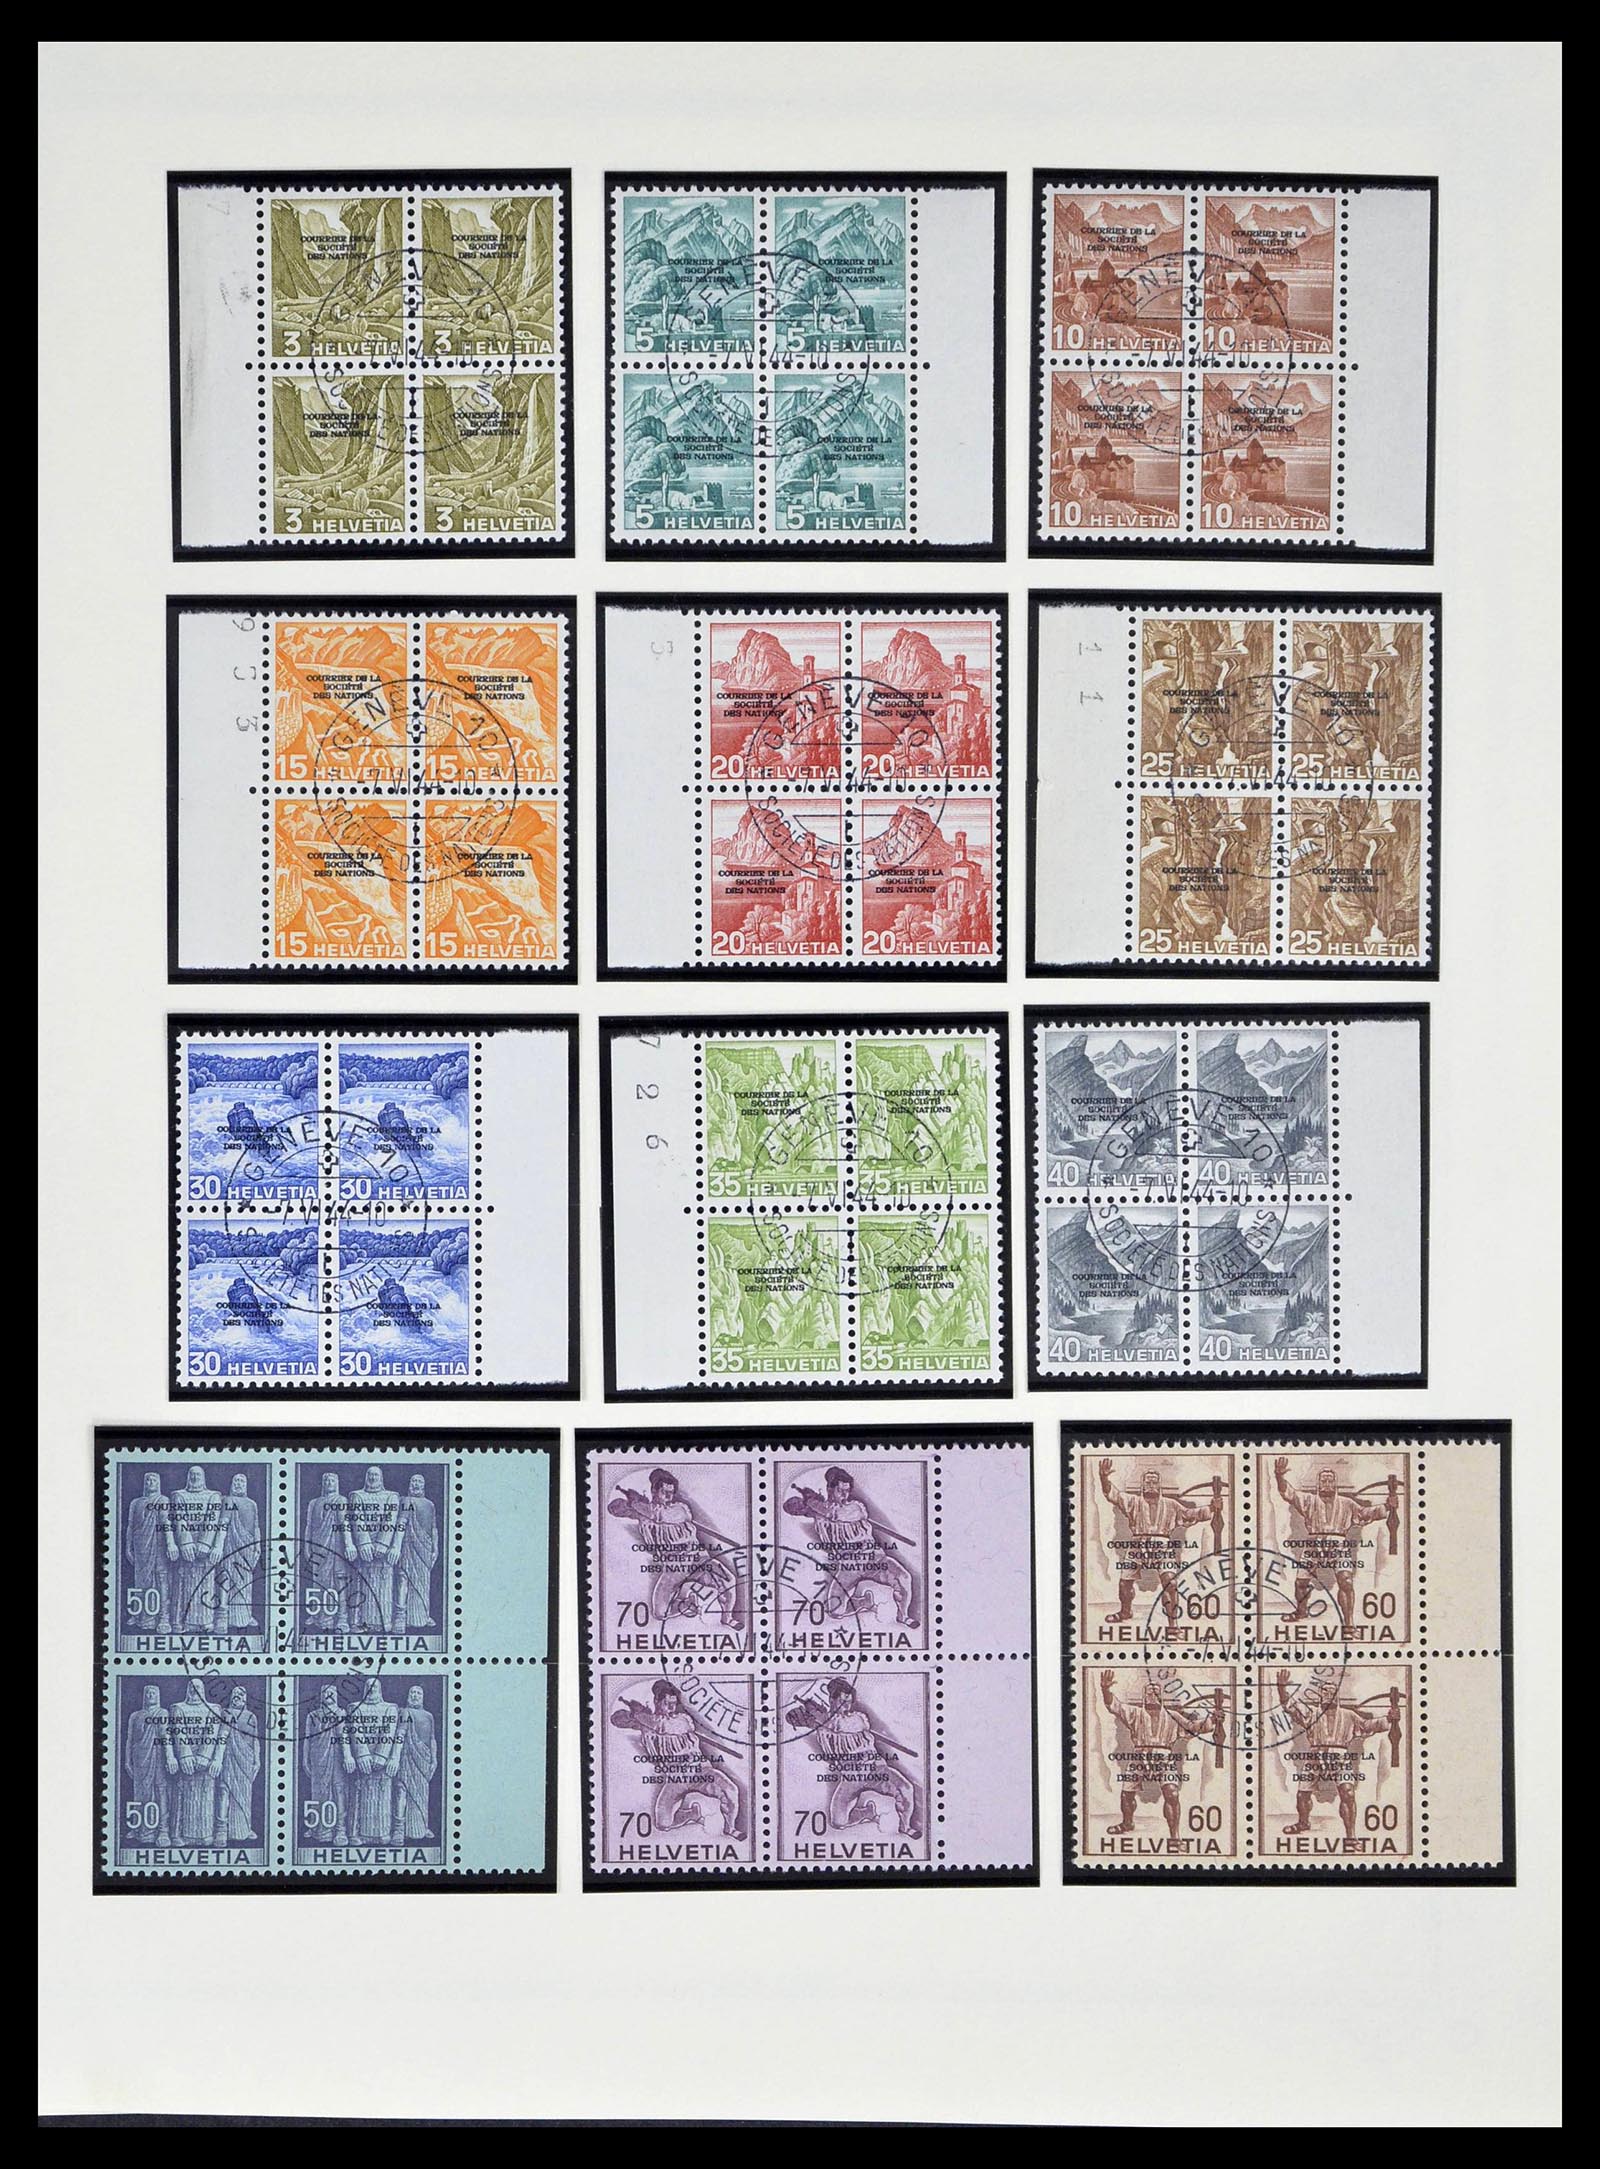 39178 0239 - Stamp collection 39178 Switzerland 1850-1989.